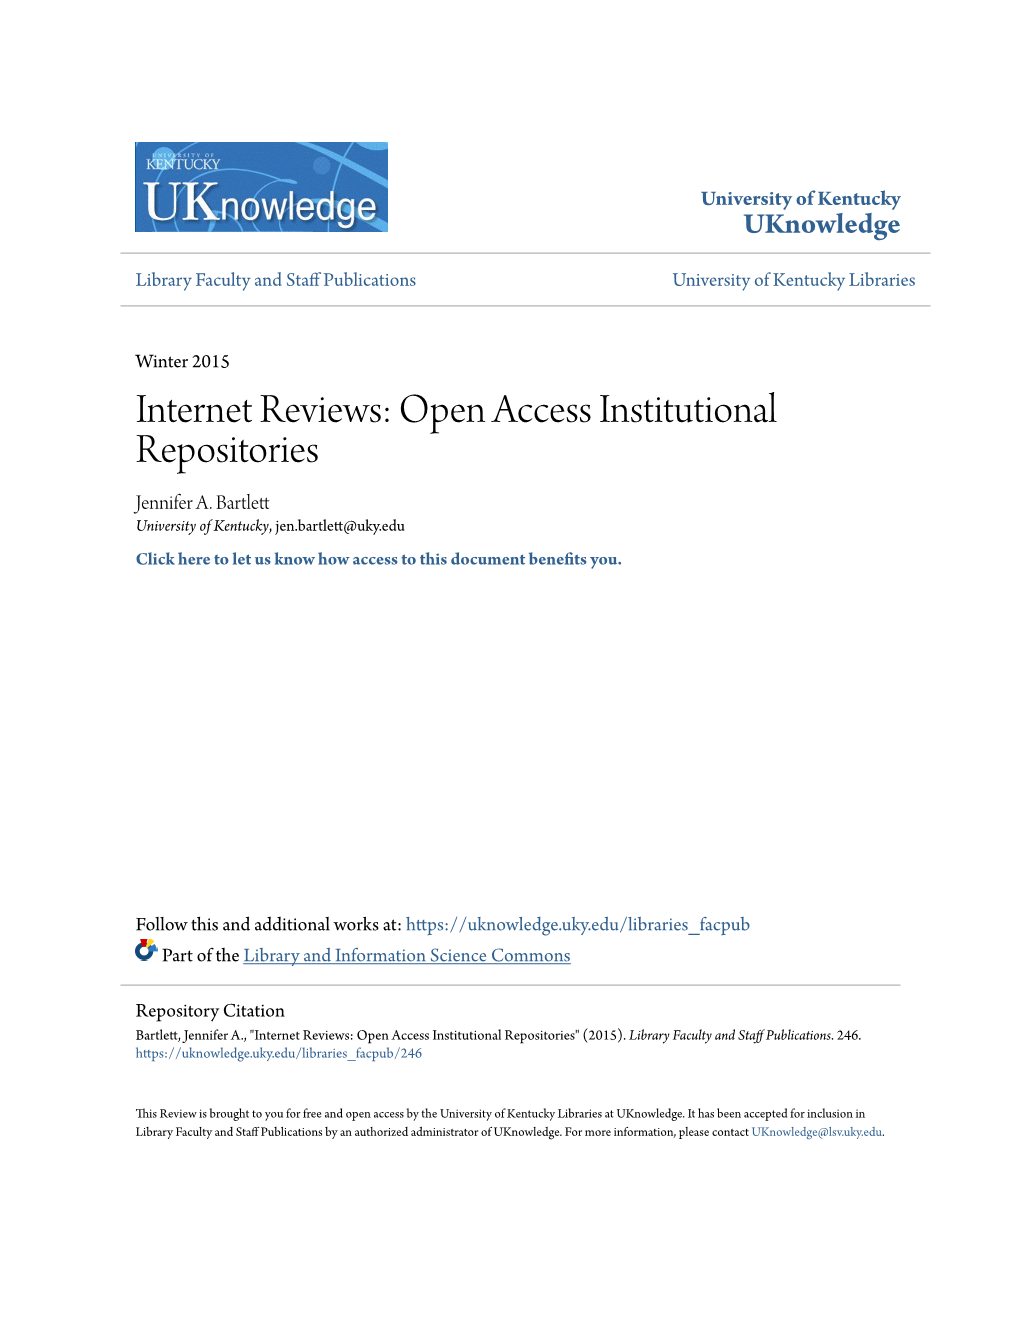 Internet Reviews: Open Access Institutional Repositories Jennifer A